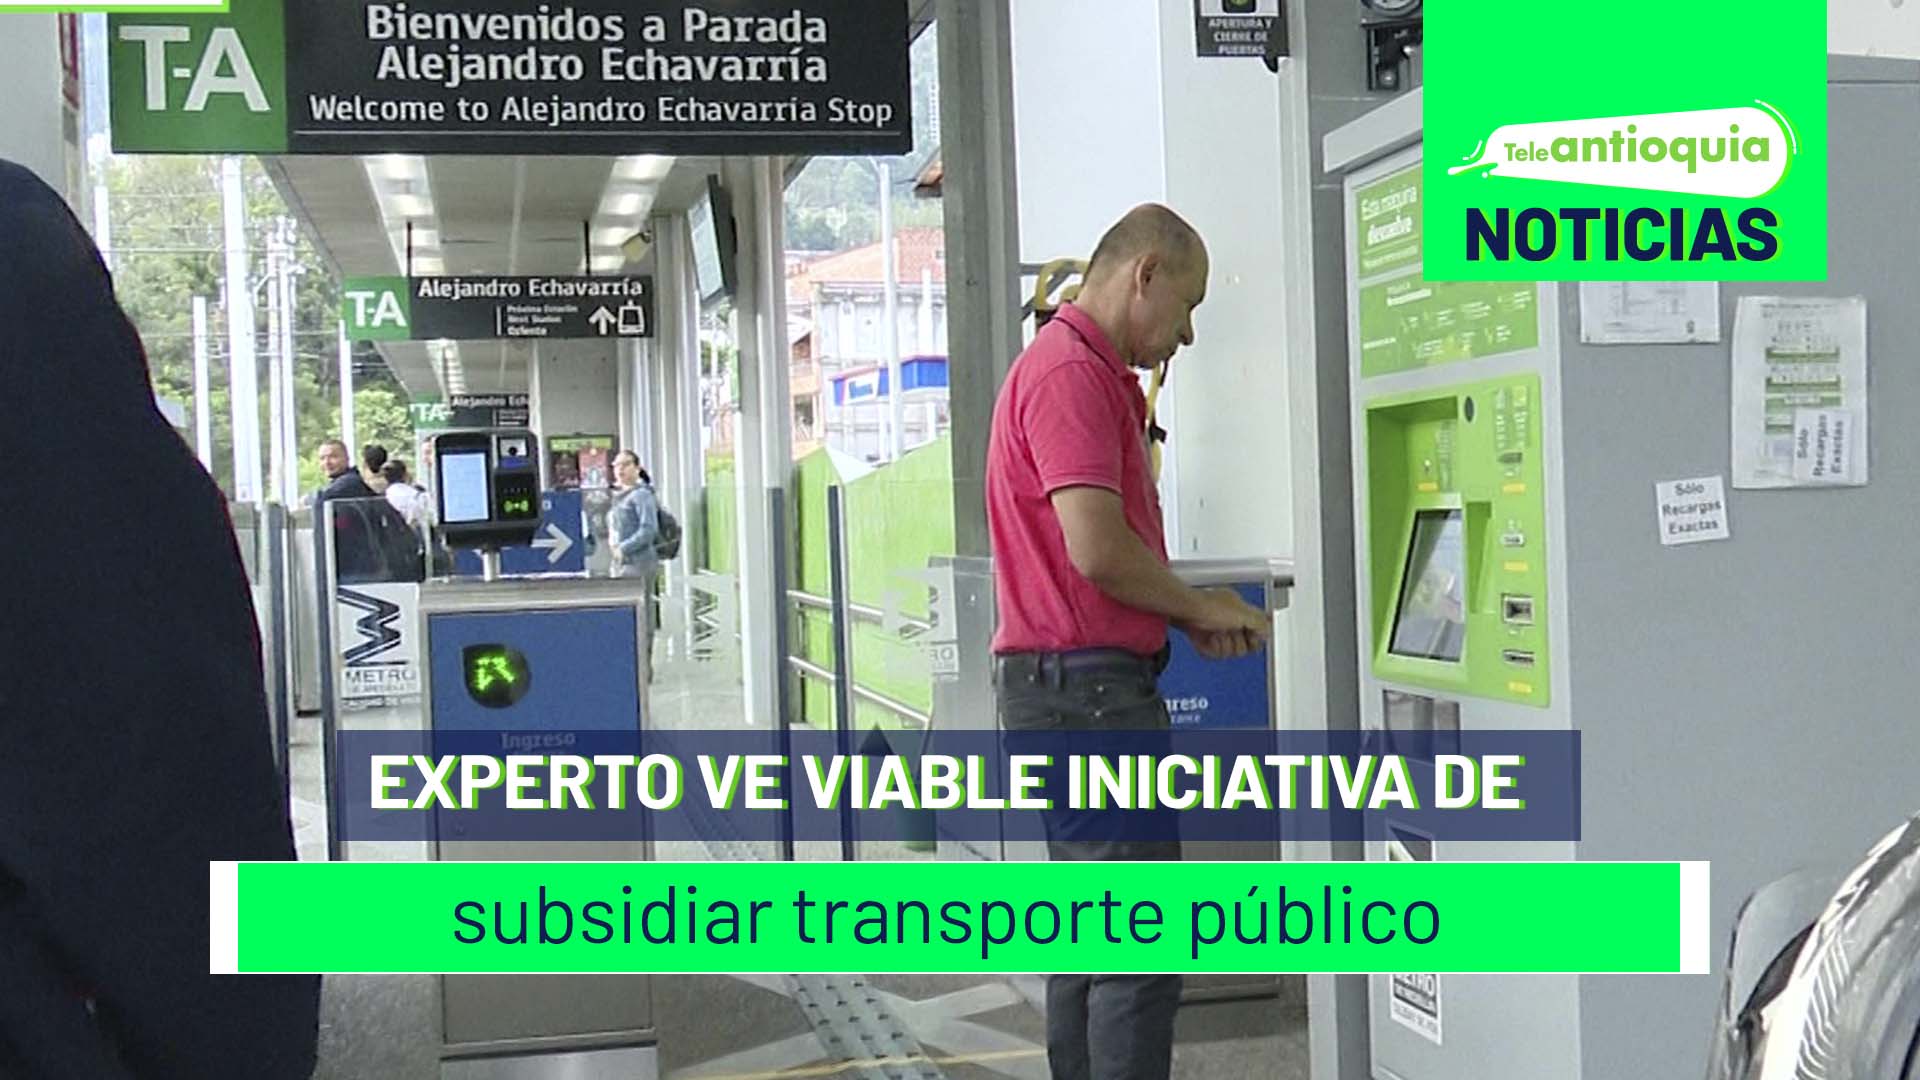 Experto ve viable iniciativa de subsidiar transporte público